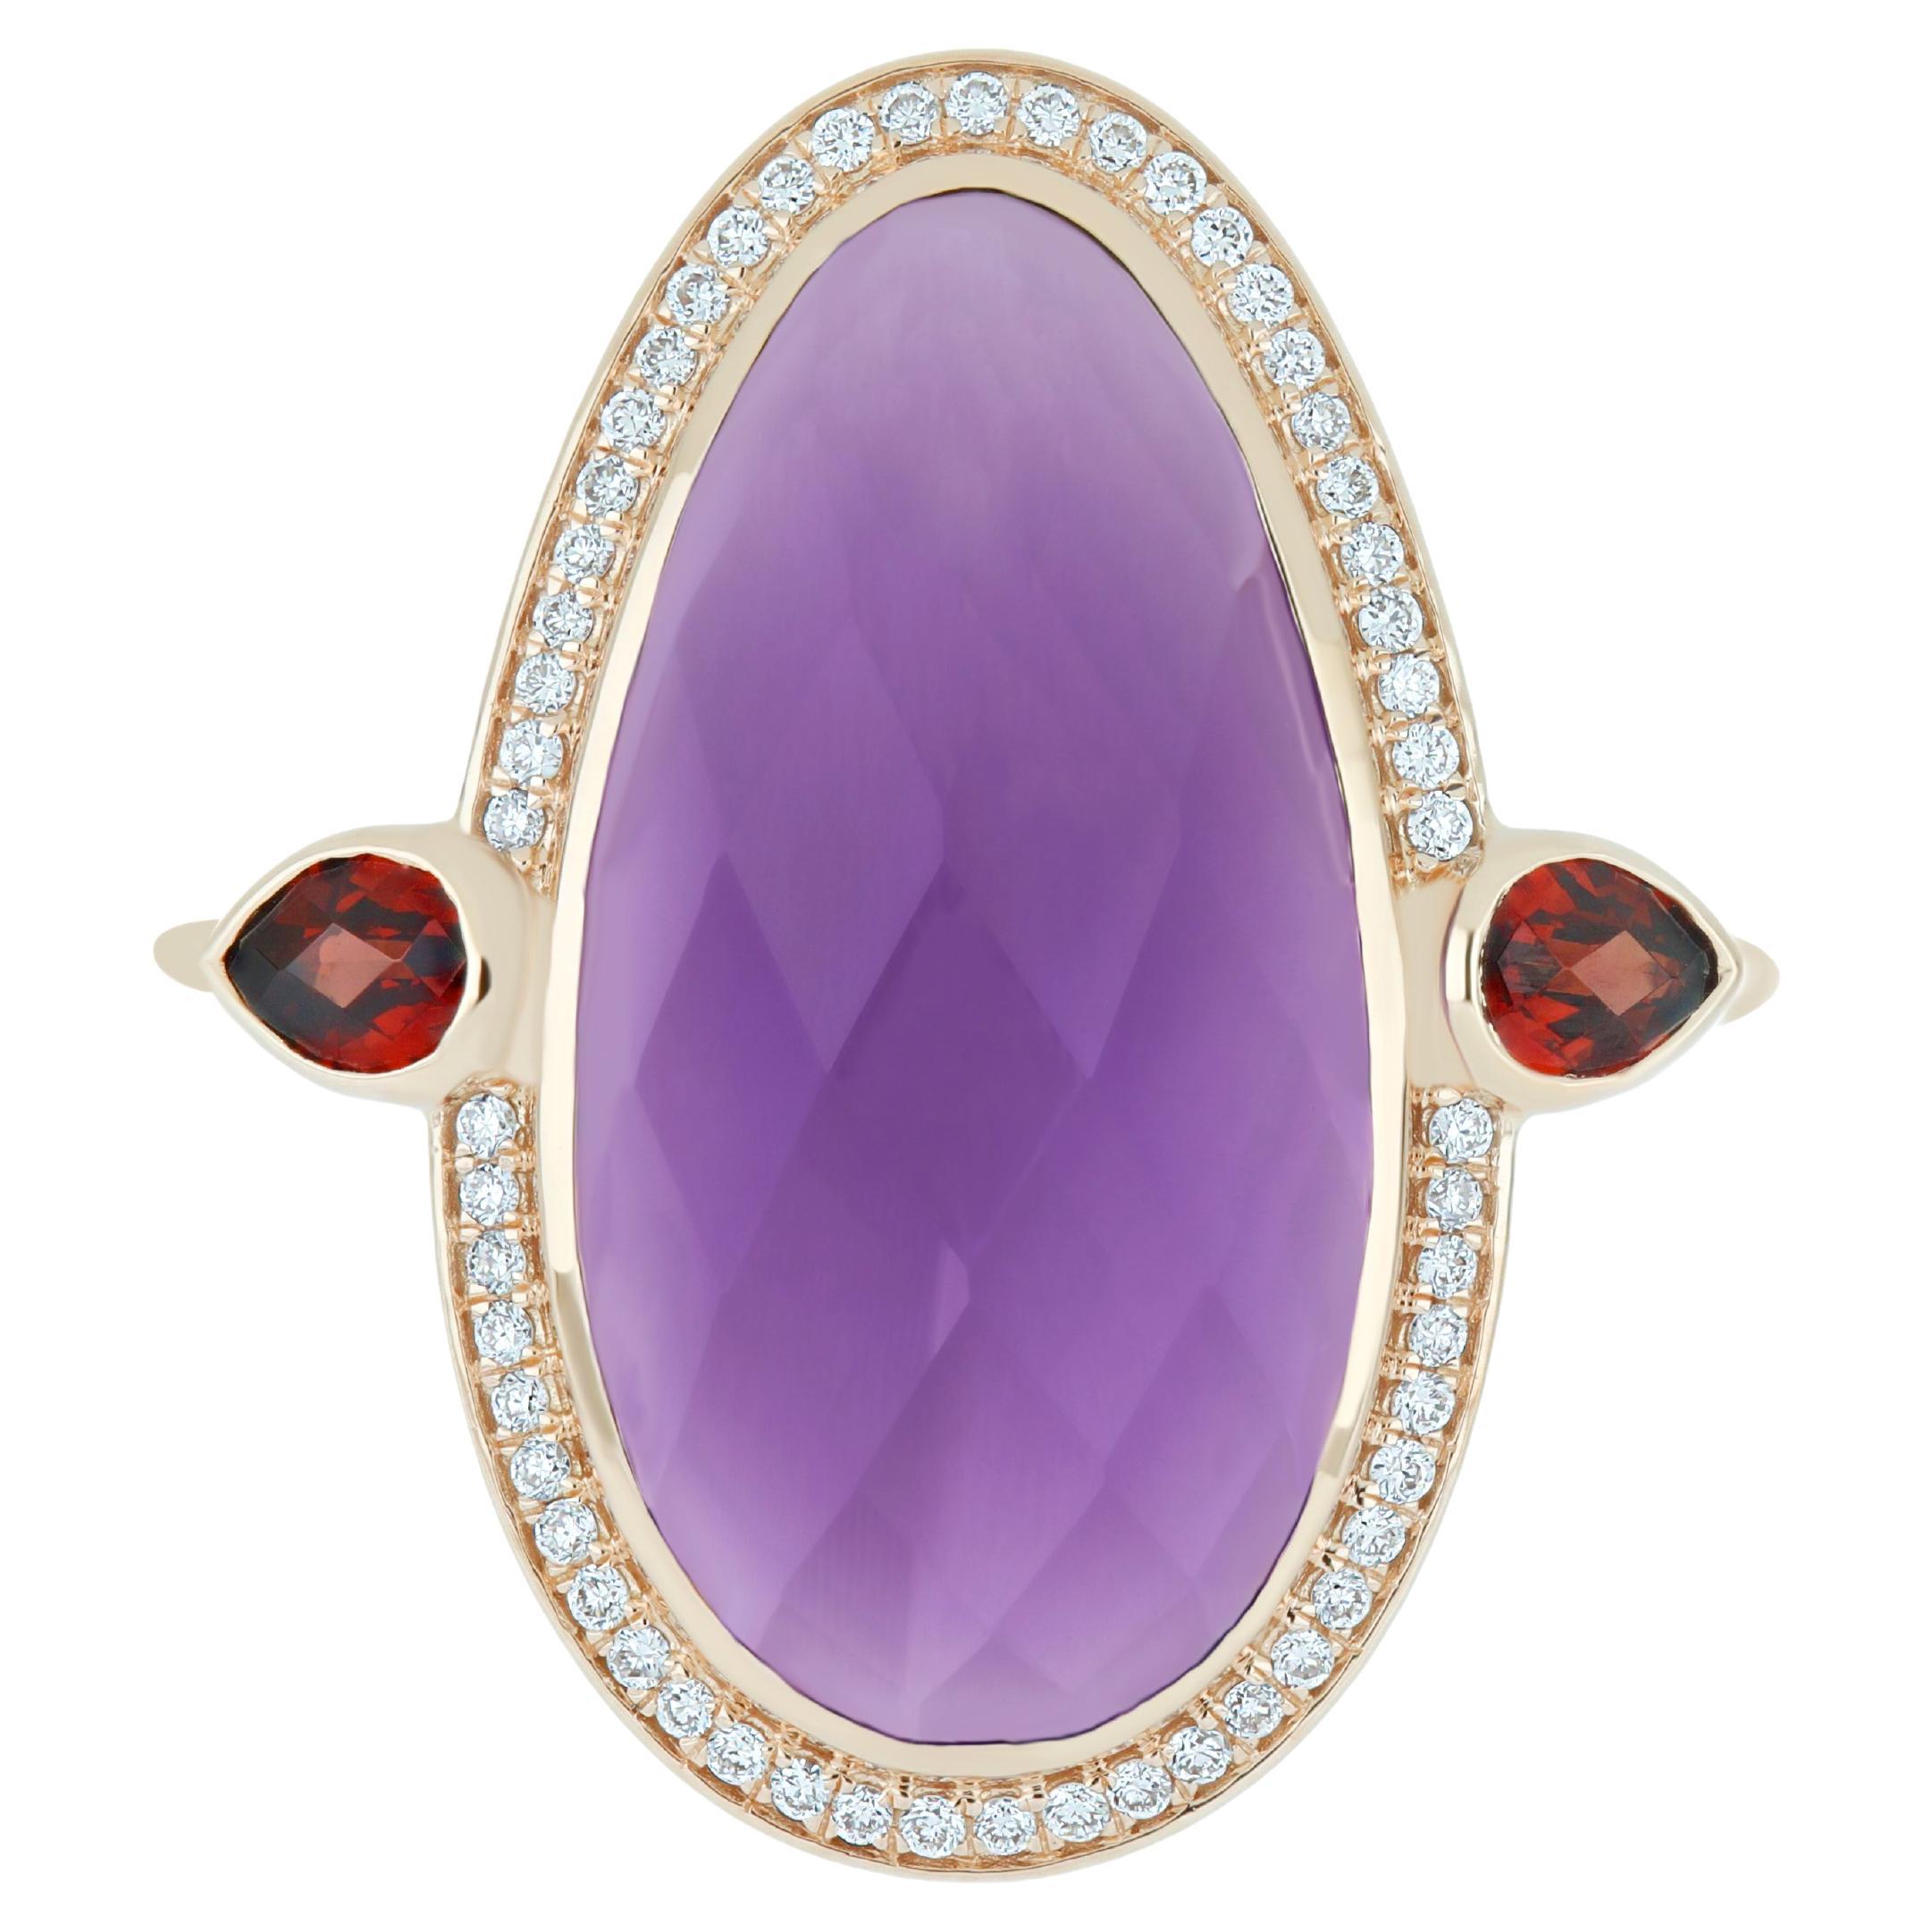 For Sale:   14K Rose Gold Handmade jewelry, Amethyst, Garnet & Diamond Ring Birth stone